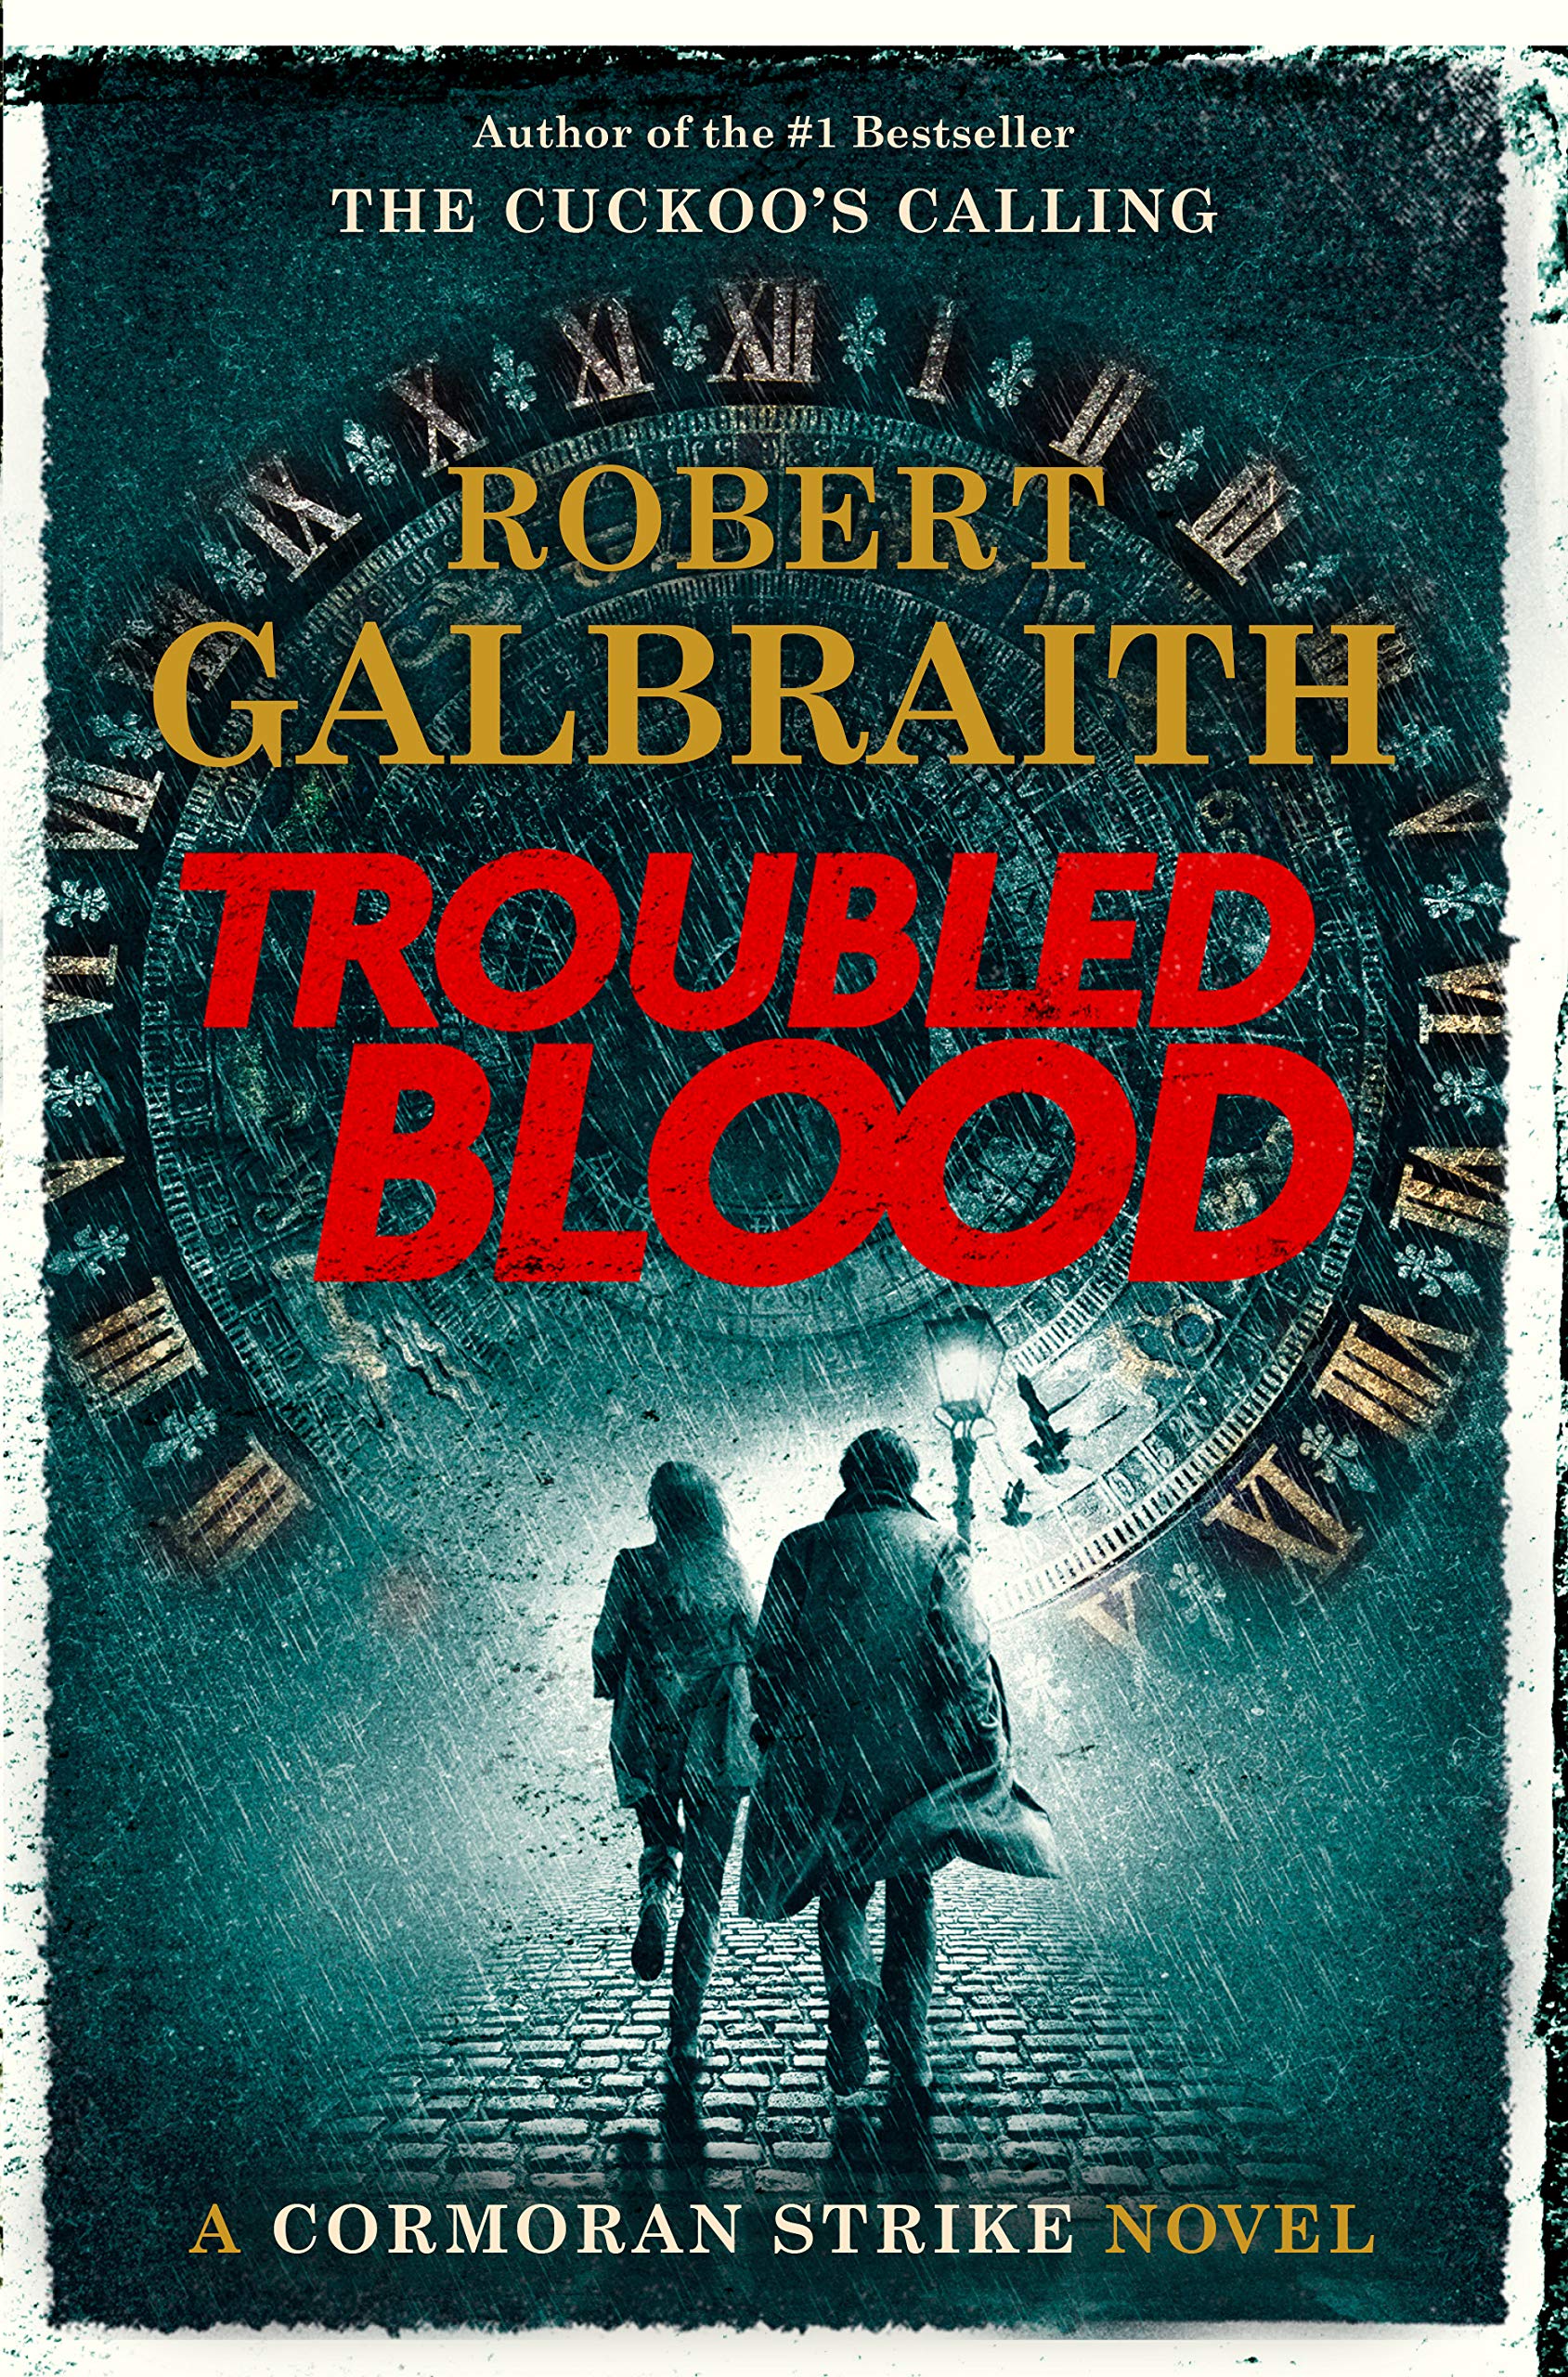 Hong Kong book shop Troubled Blood (Publication date: September 15, 2020